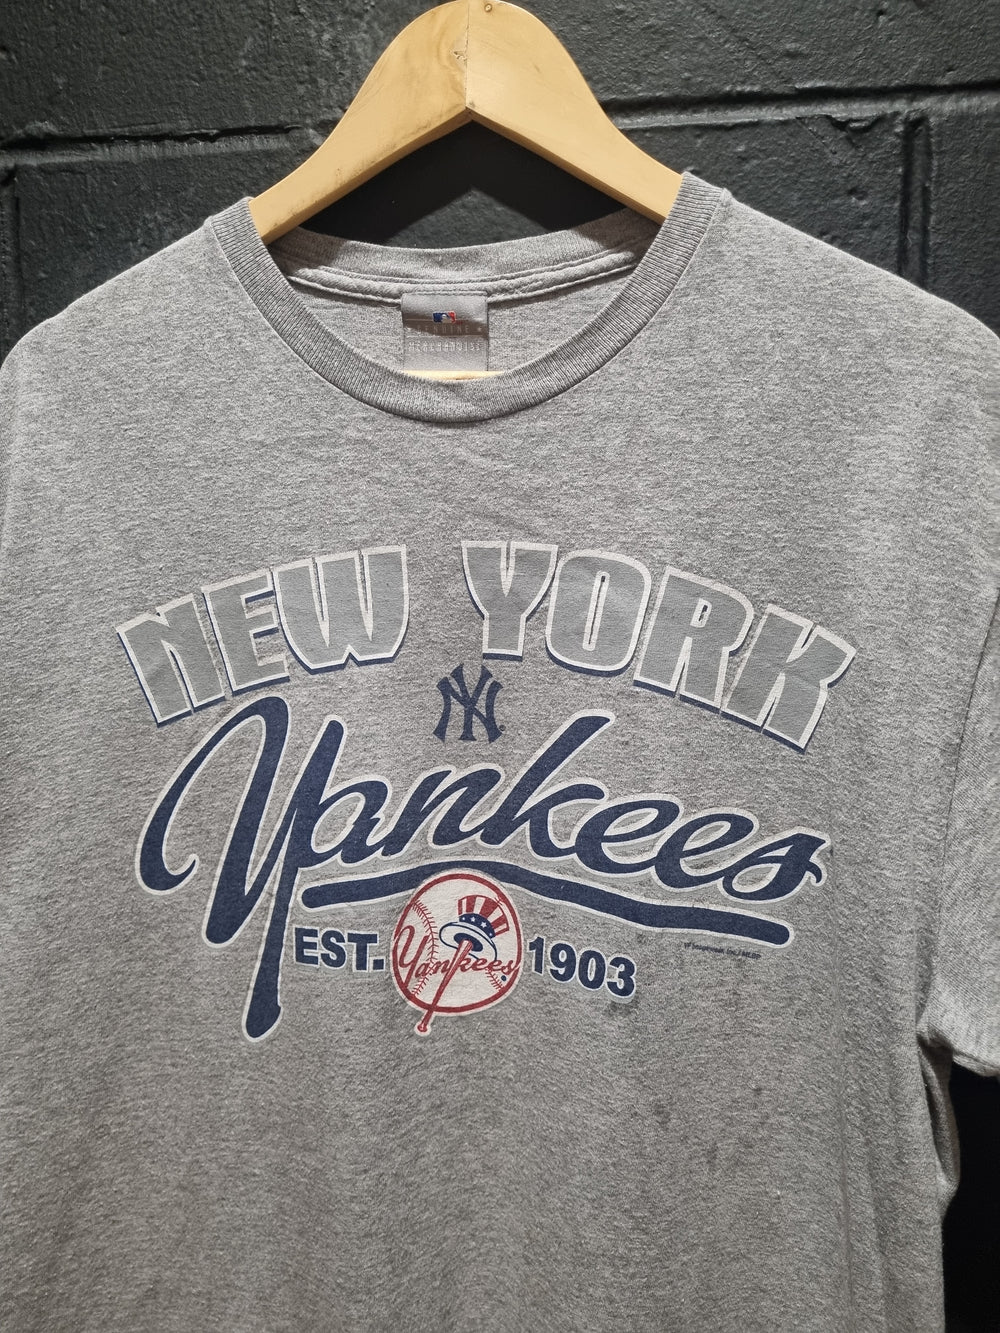 New York Yankees Genuine Merchandise Large